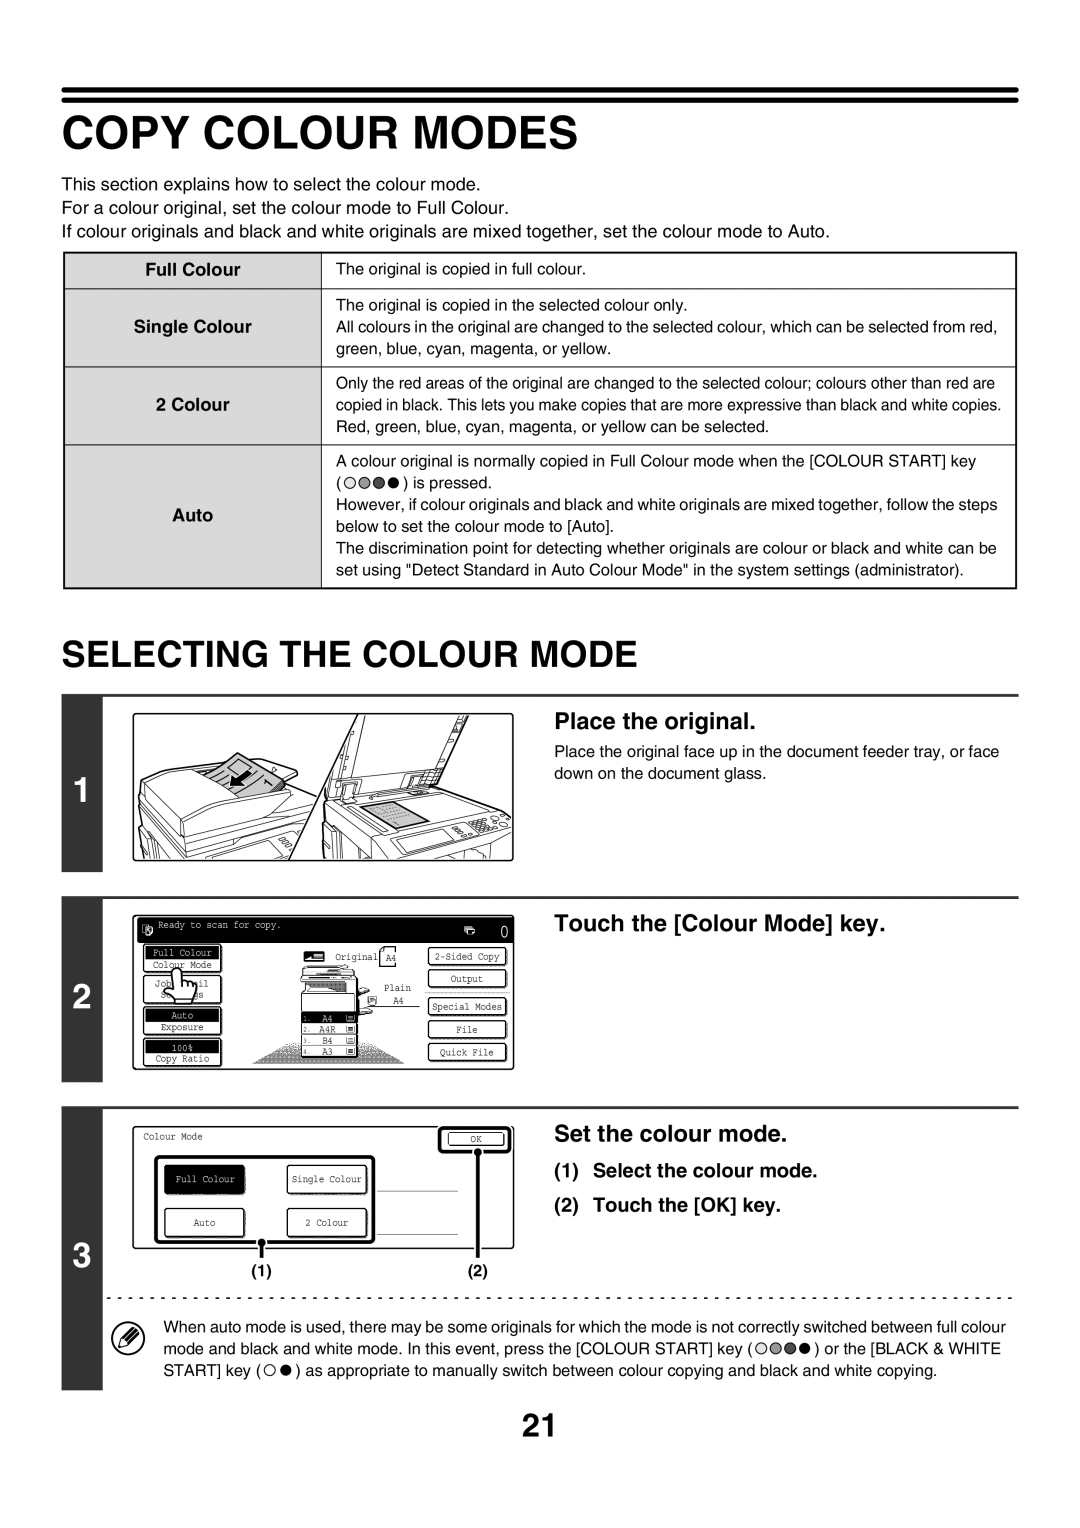 Sharp MX-3500N, MX-4501N Copy Colour Modes, Selecting The Colour Mode, Touch the Colour Mode key, OKSet the colour mode 